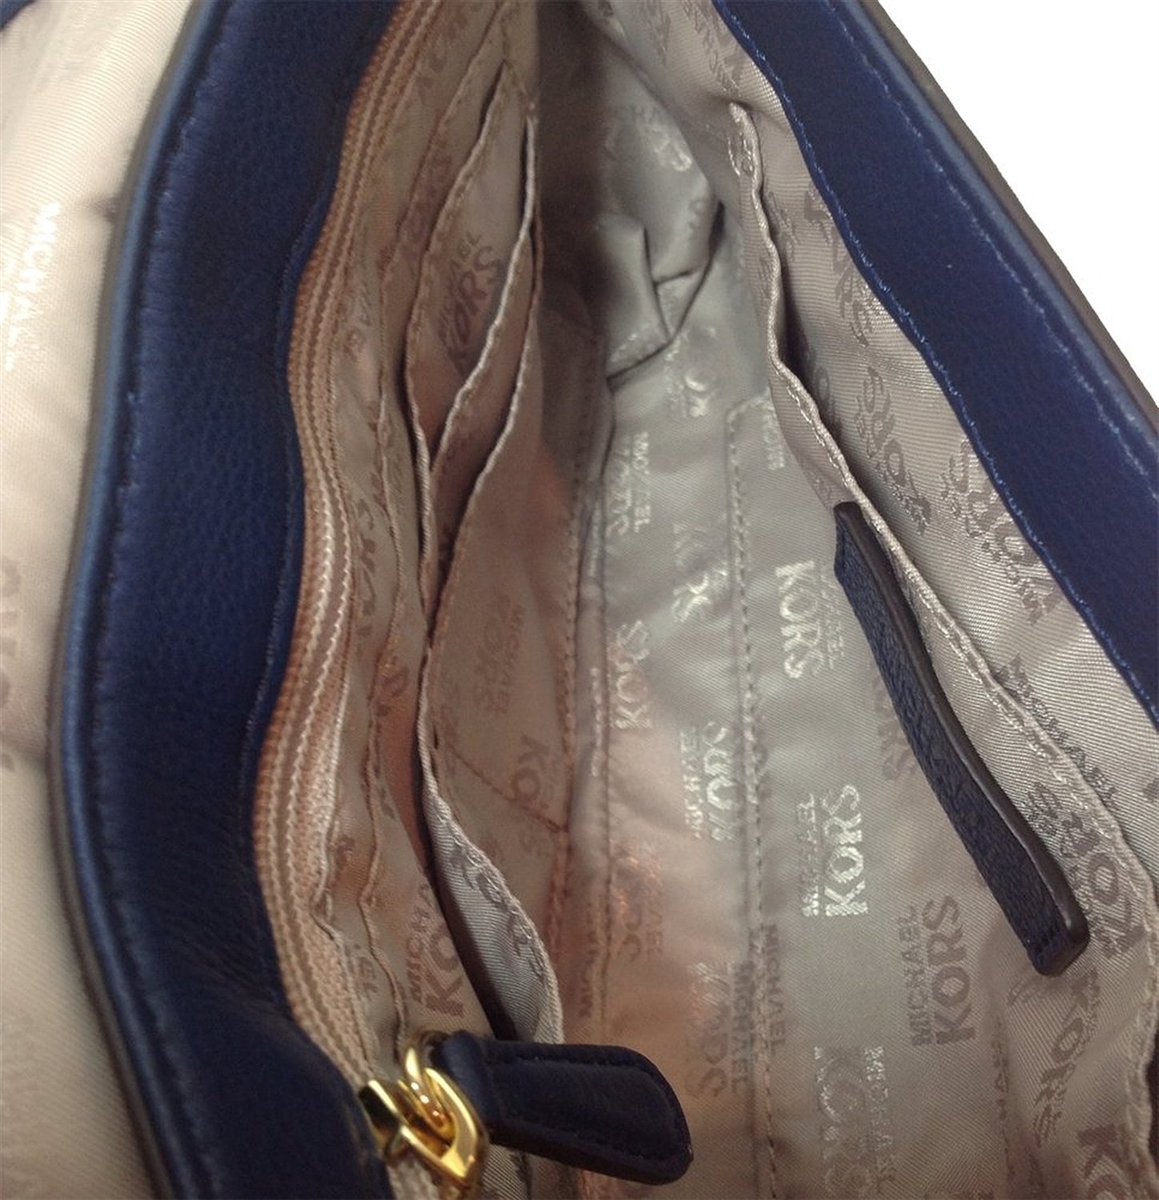 Michael Kors Jet Set Chain Leather Small Shoulder Flap Bag, Navy